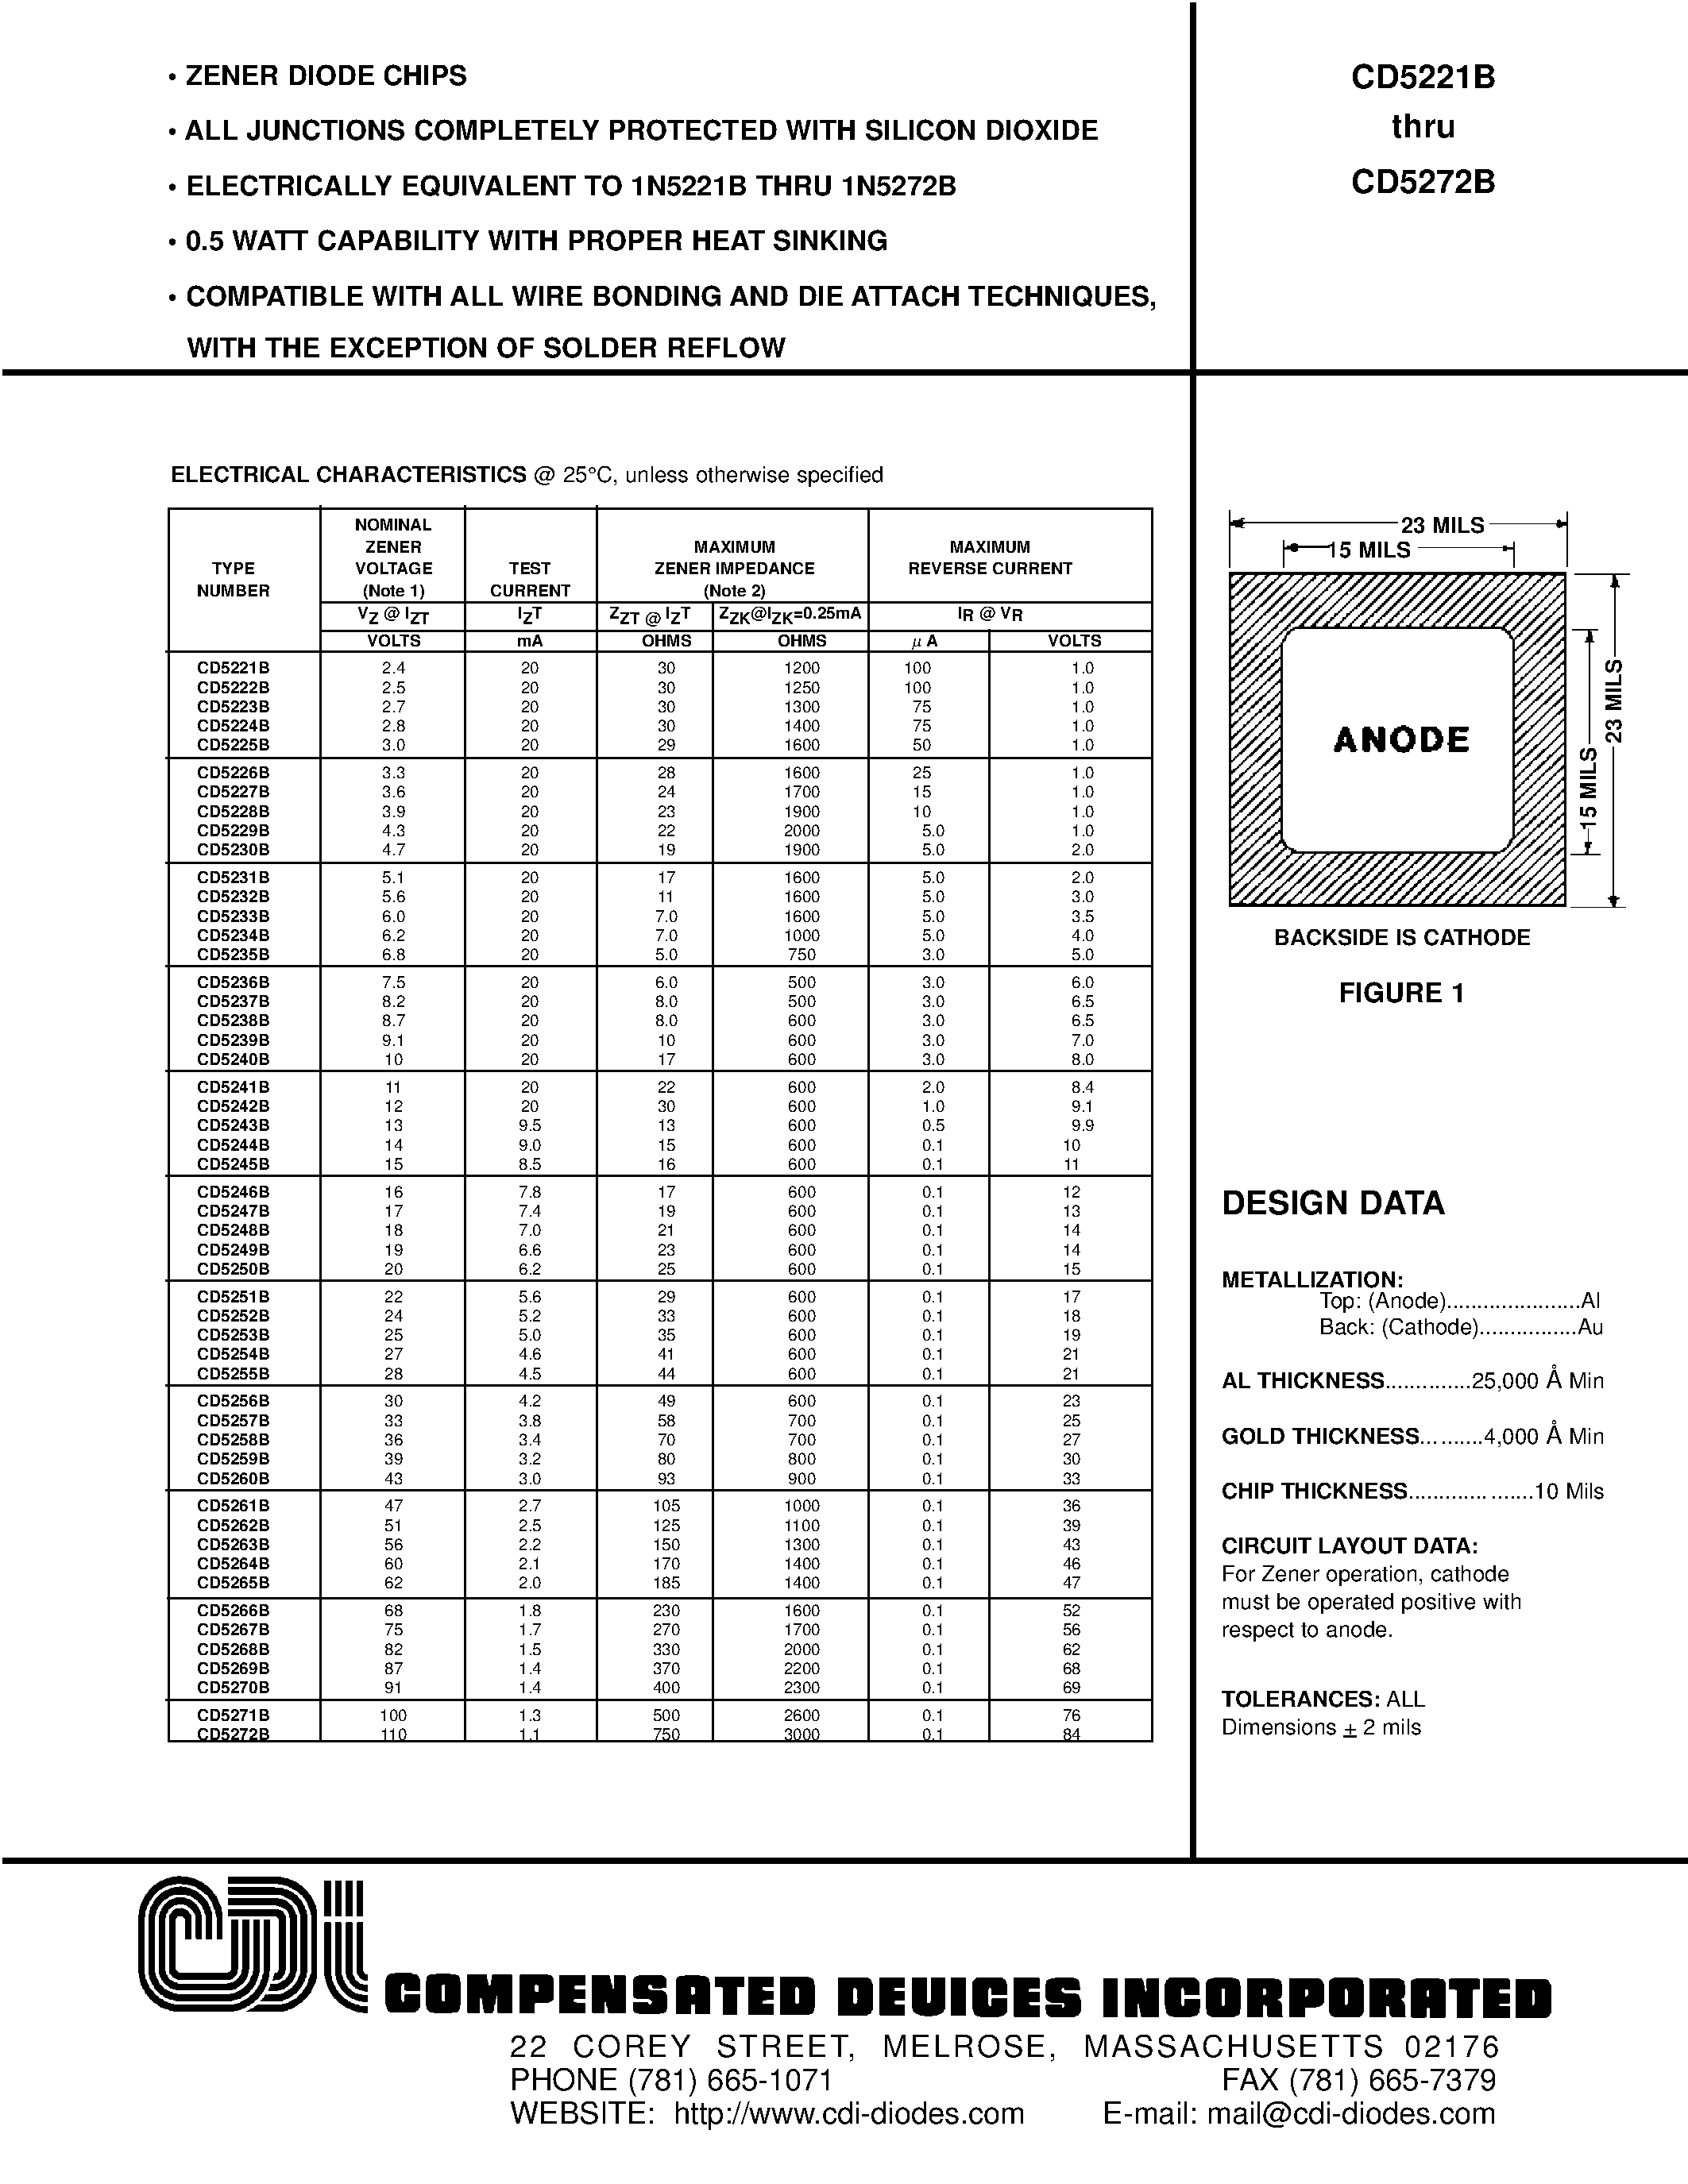 Datasheet CD5225B - ZENER DIODE CHIPS page 1